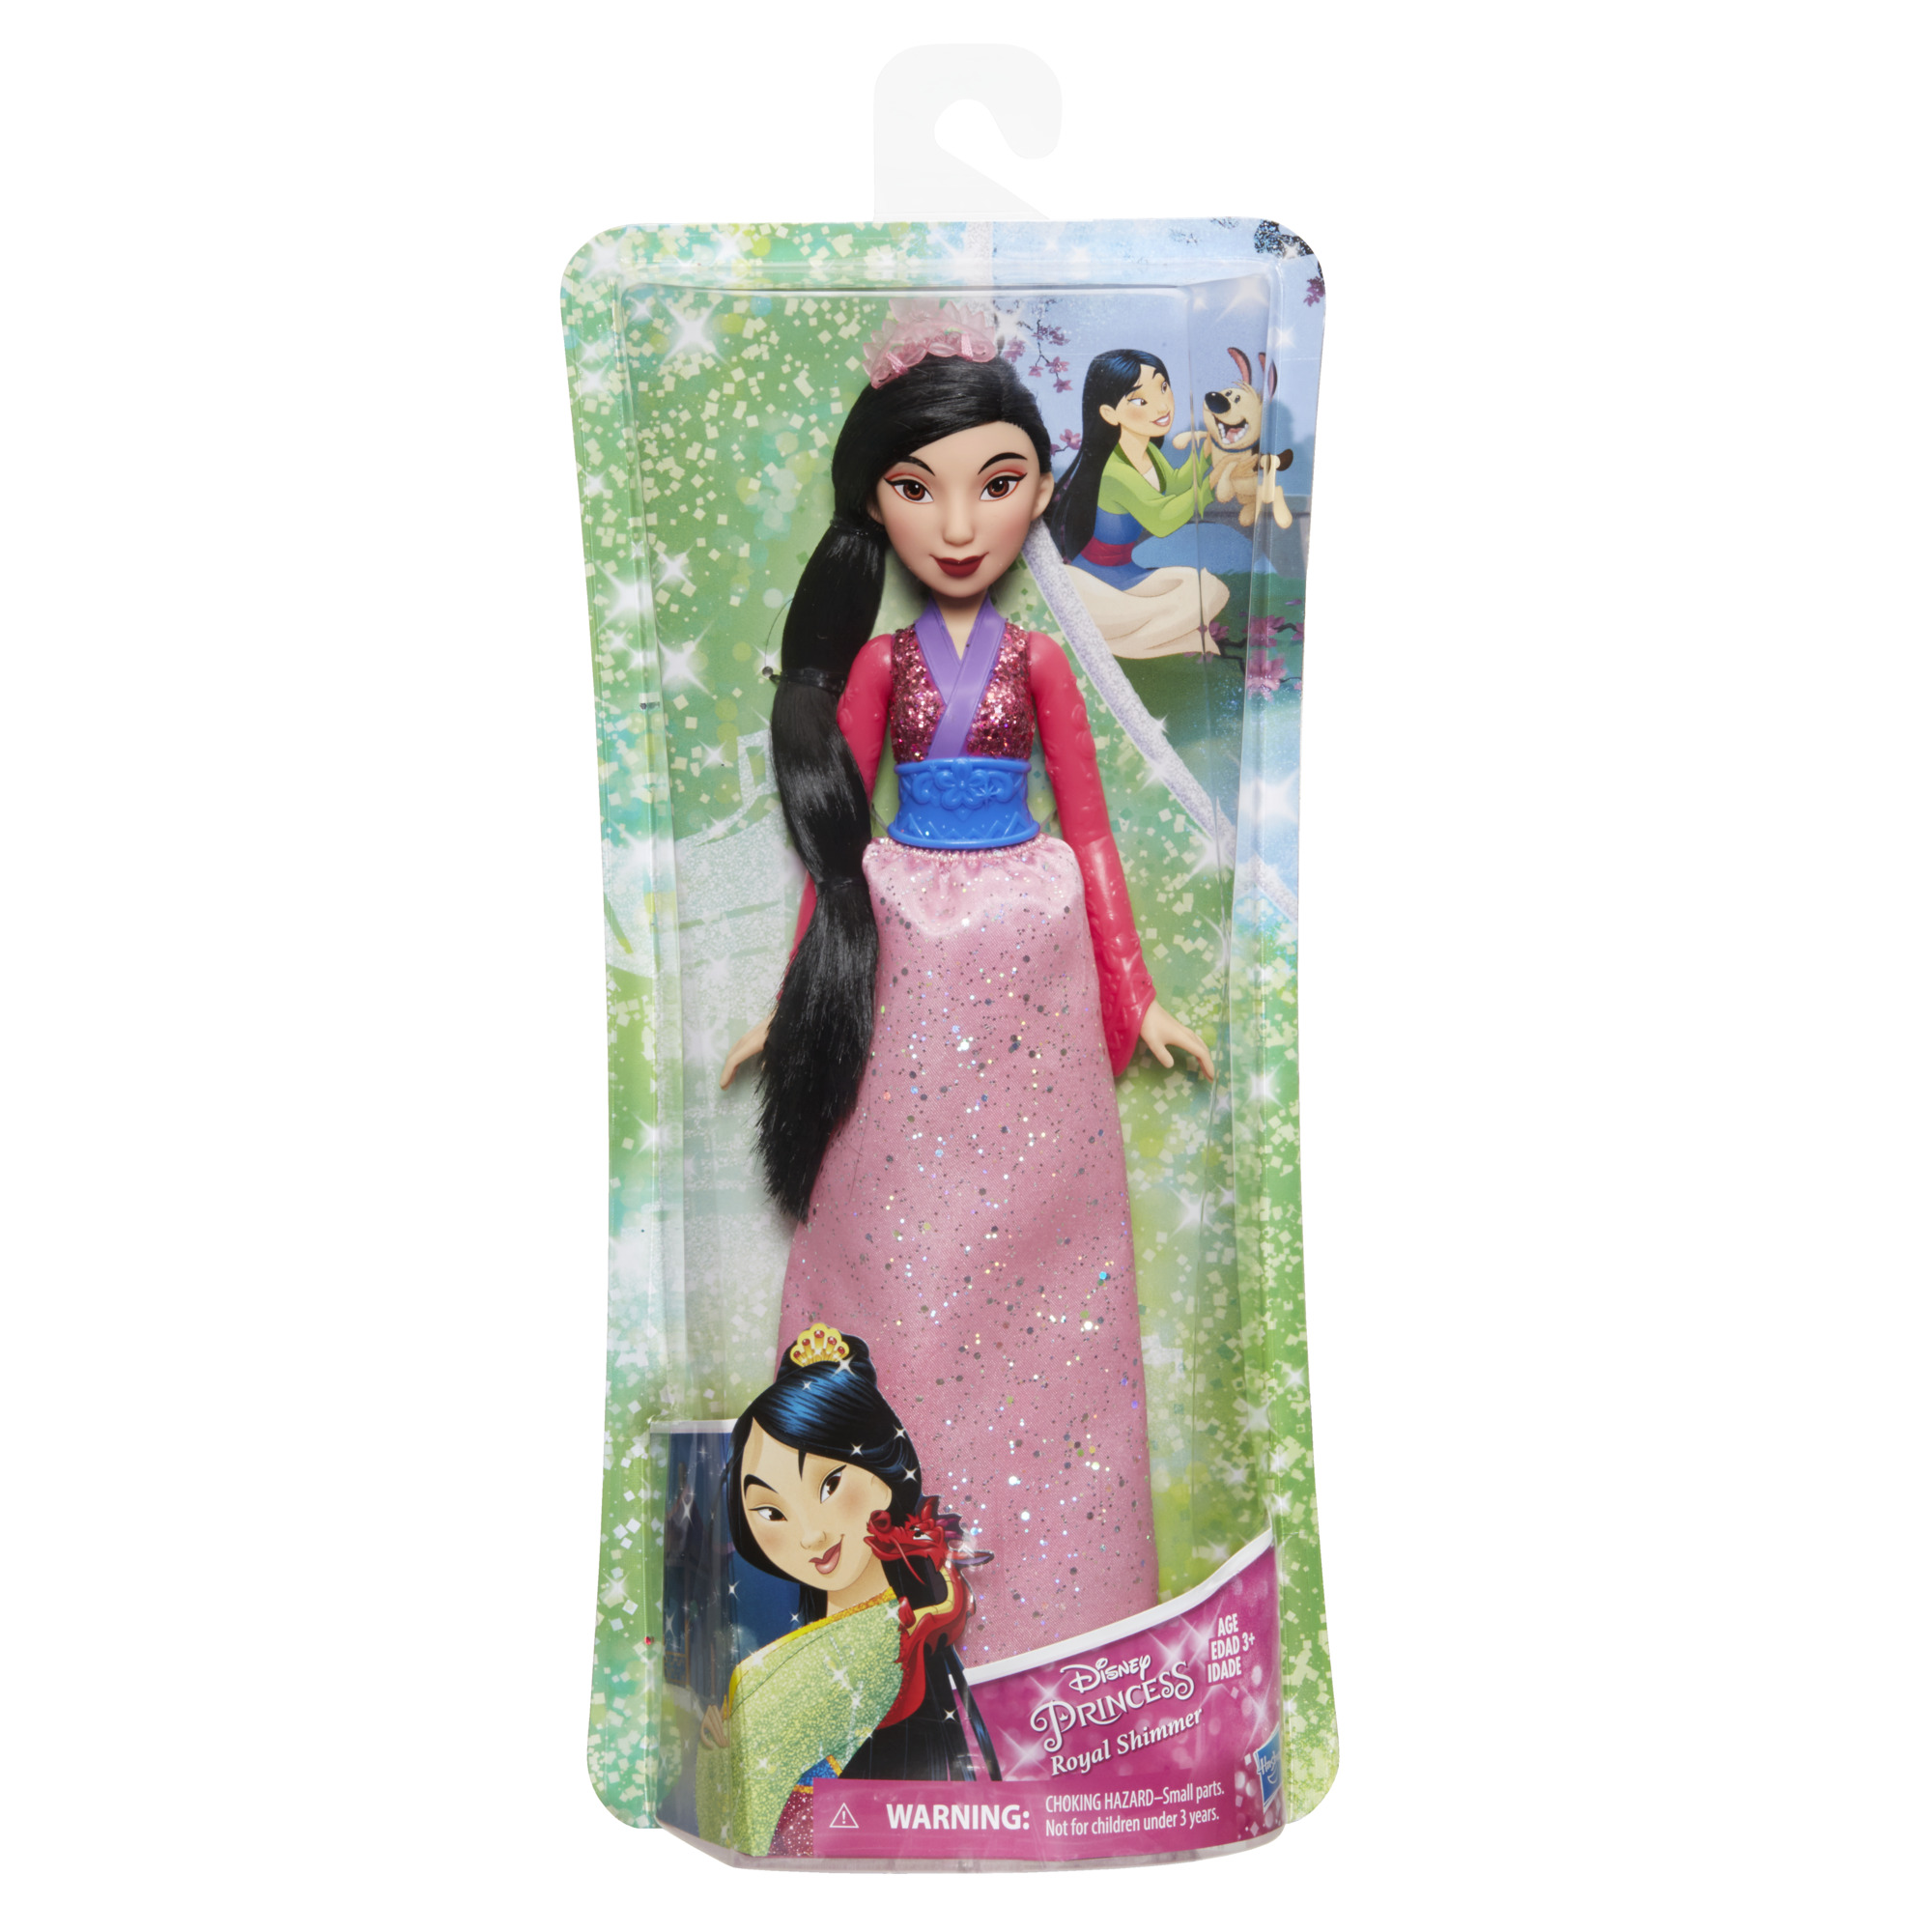 Disney Princess Royal Shimmer Mulan, with Sparkly Skirt, Tiara, Shoes, Ages 3+ - image 2 of 8